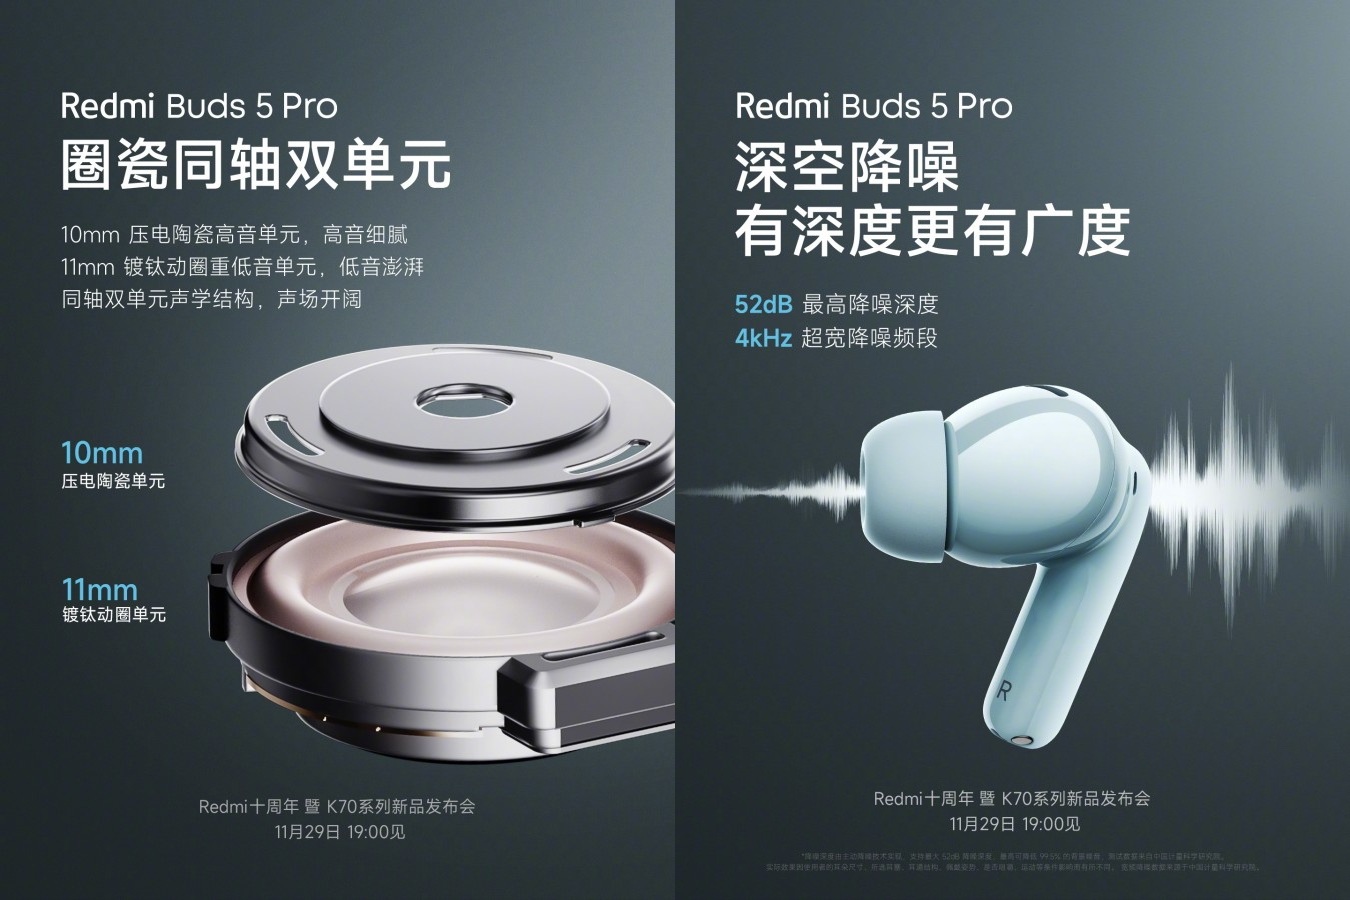 Xiaomi Redmi Buds 5 Pro review